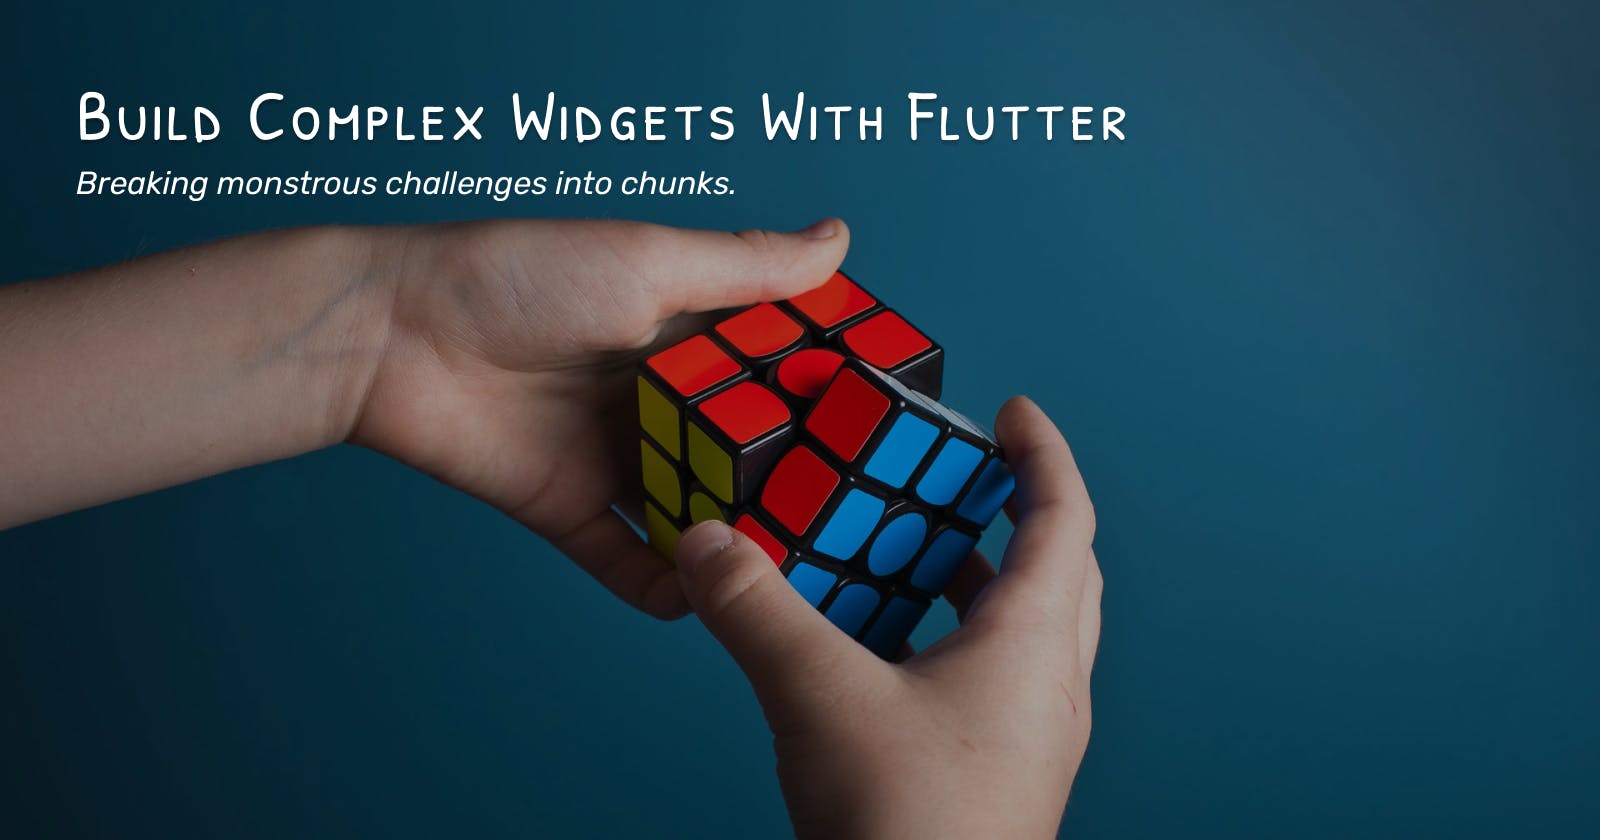 Build complex widgets with flutter